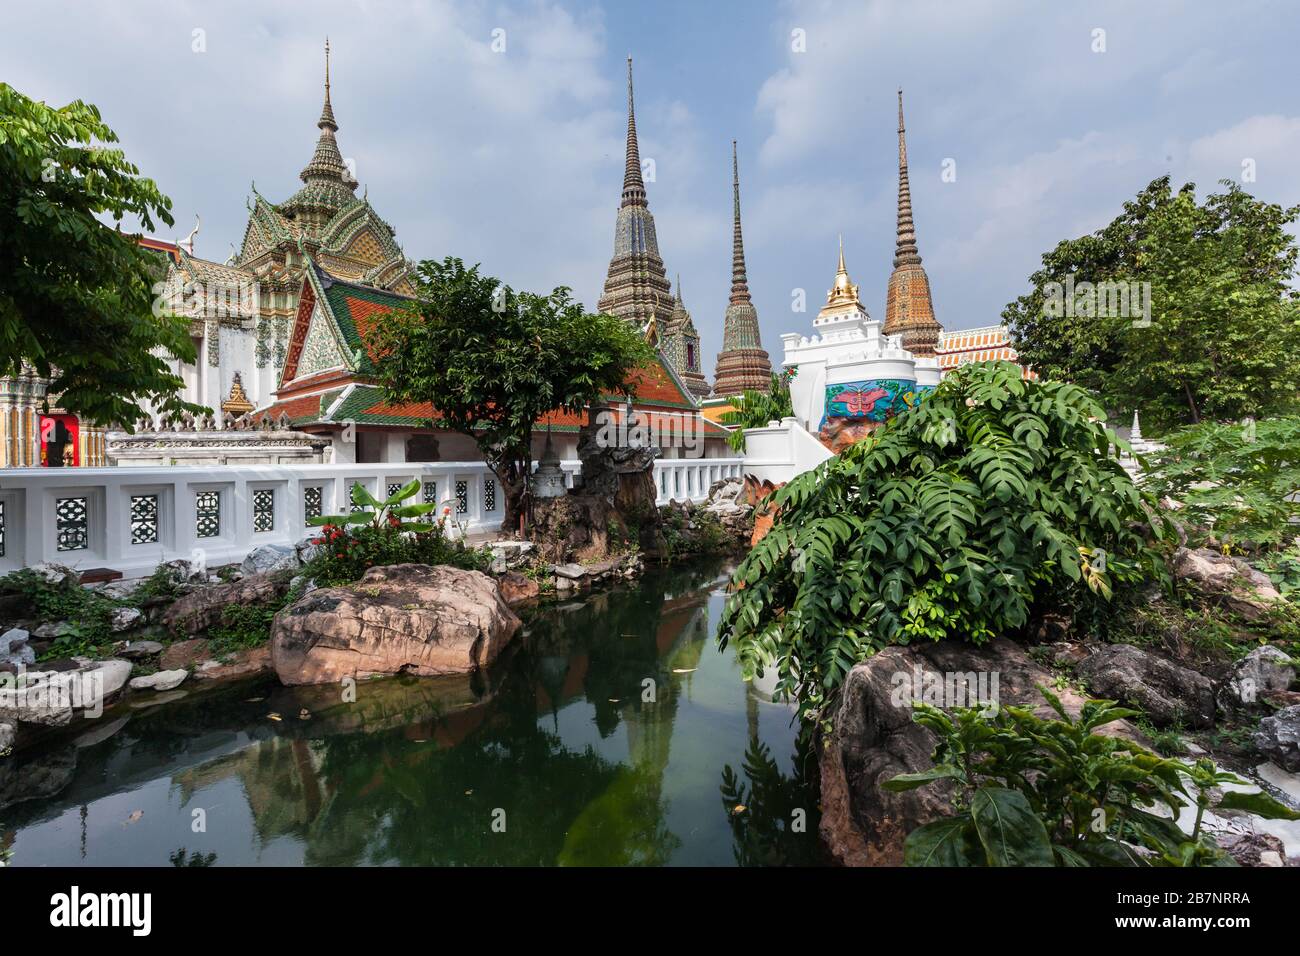 Buddistischer Tempel Wat Pho Bangkok Tageslicht Stockfoto